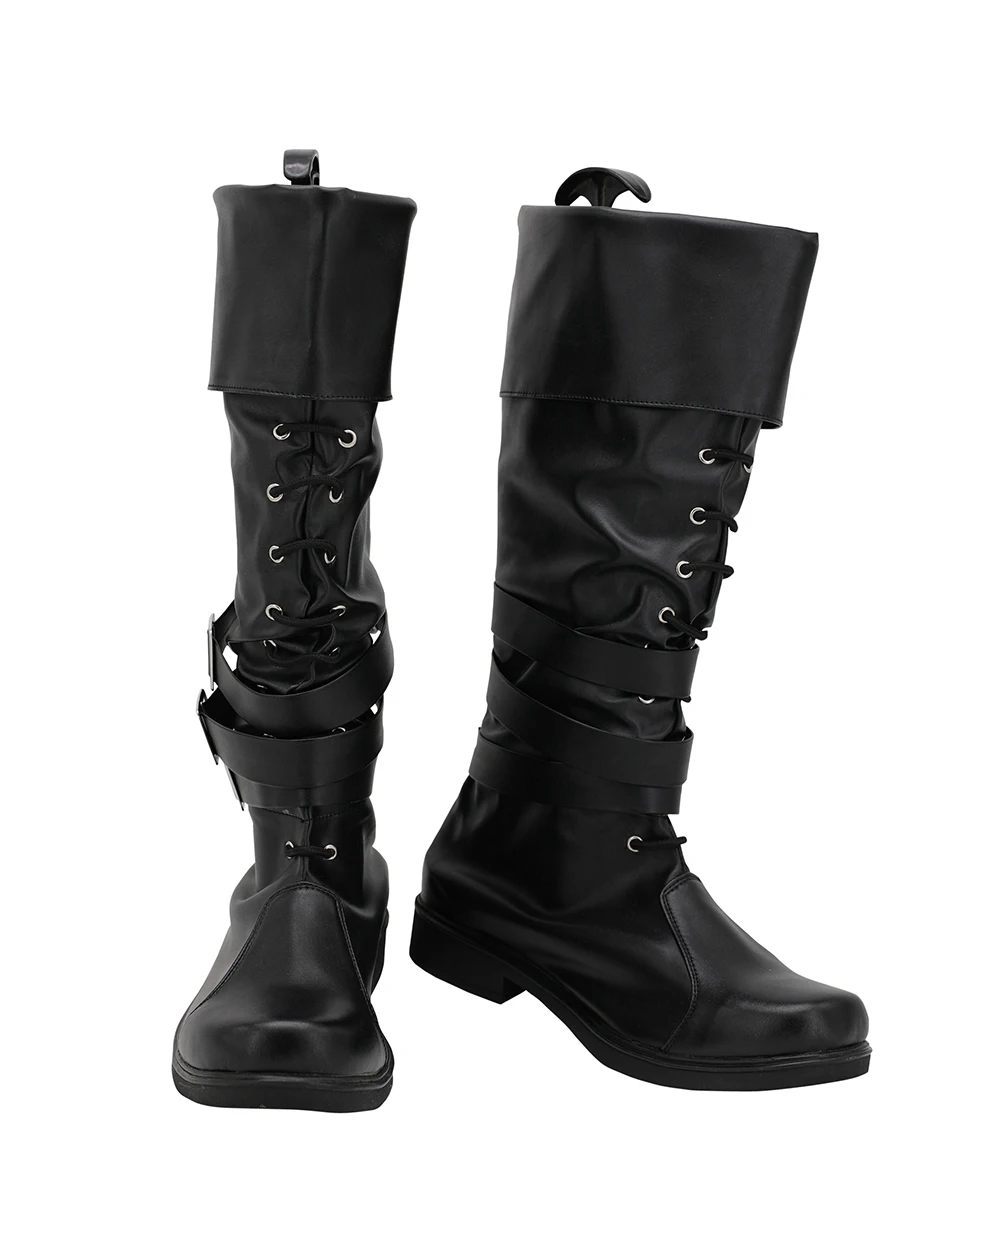 Fantastic Beasts The Crimes of Grindelwald Gellert Grindelwald Cosplay Boots Black Leather Shoes Custom Made (2)